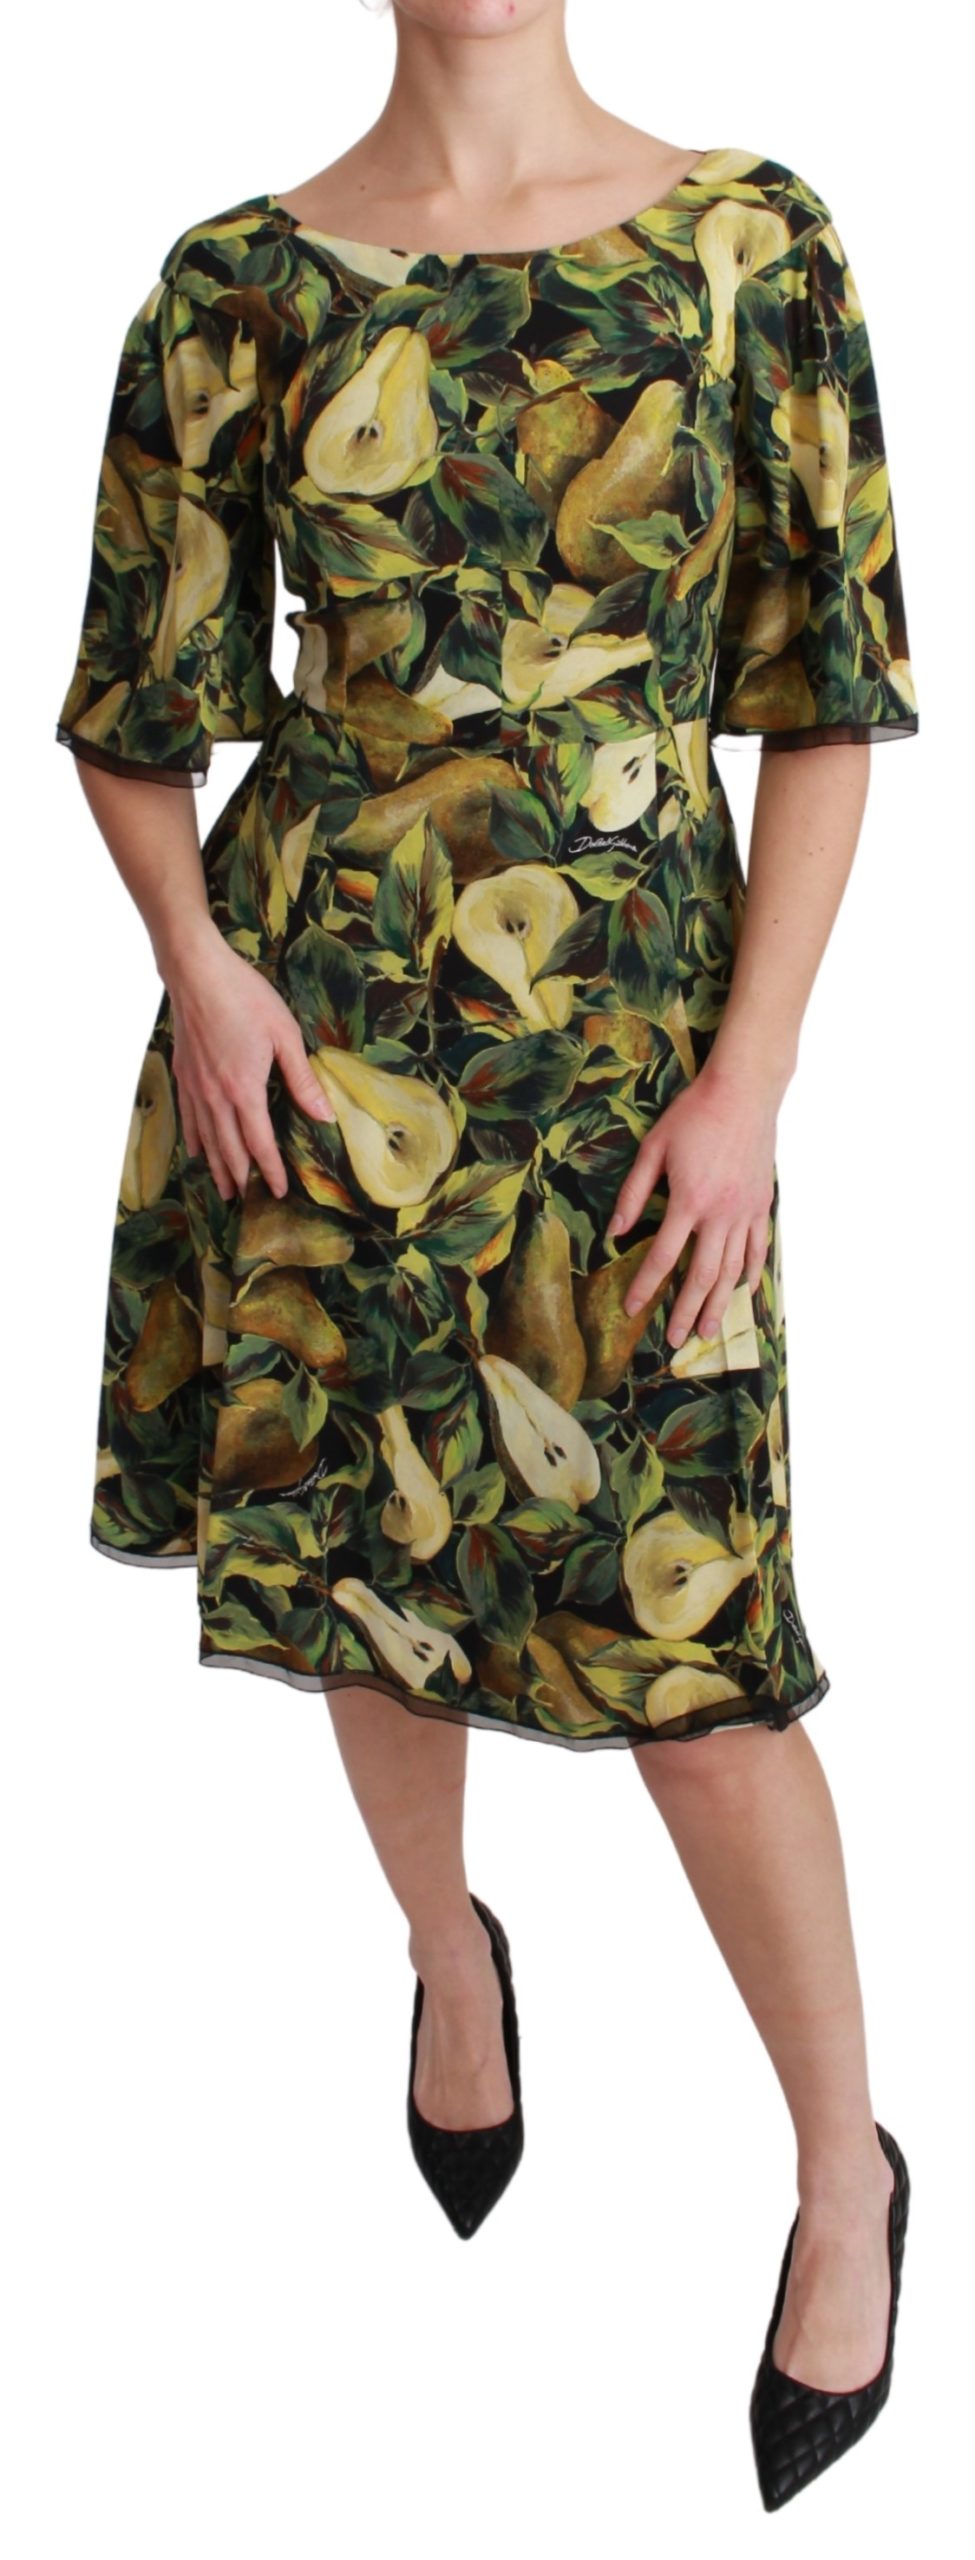 Dolce & Gabbana Women's Pear Fruit Sheath A-line Stretch Dress Green DR2552 - IT40|S